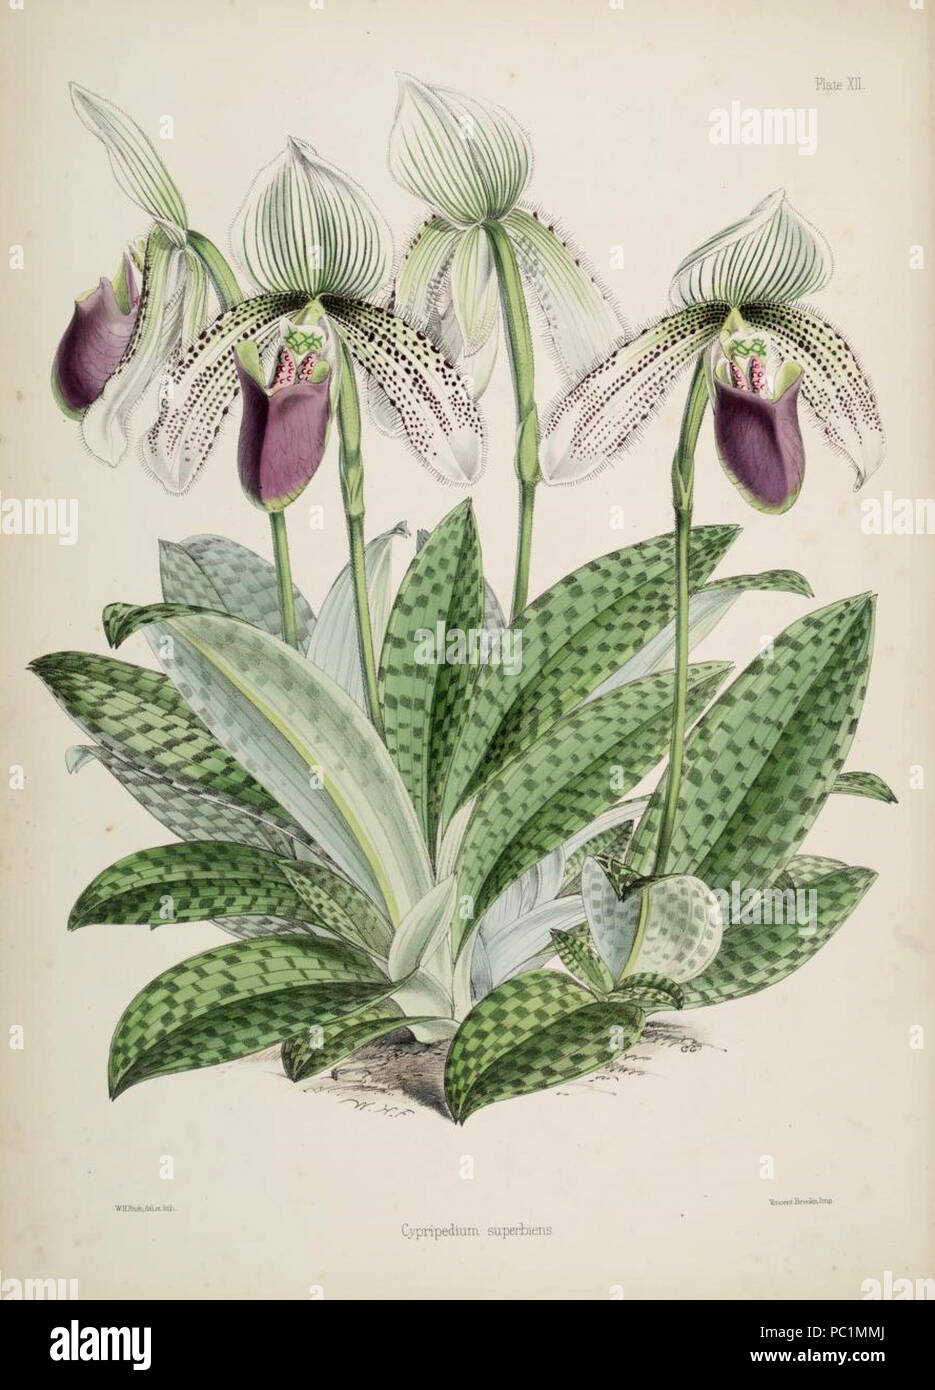 466 Paphiopedilum superbiens (as Cypripedium s.) Warner, Williams - Select orch. pl. 2nd pl. 12 (1865-1875) Stock Photo